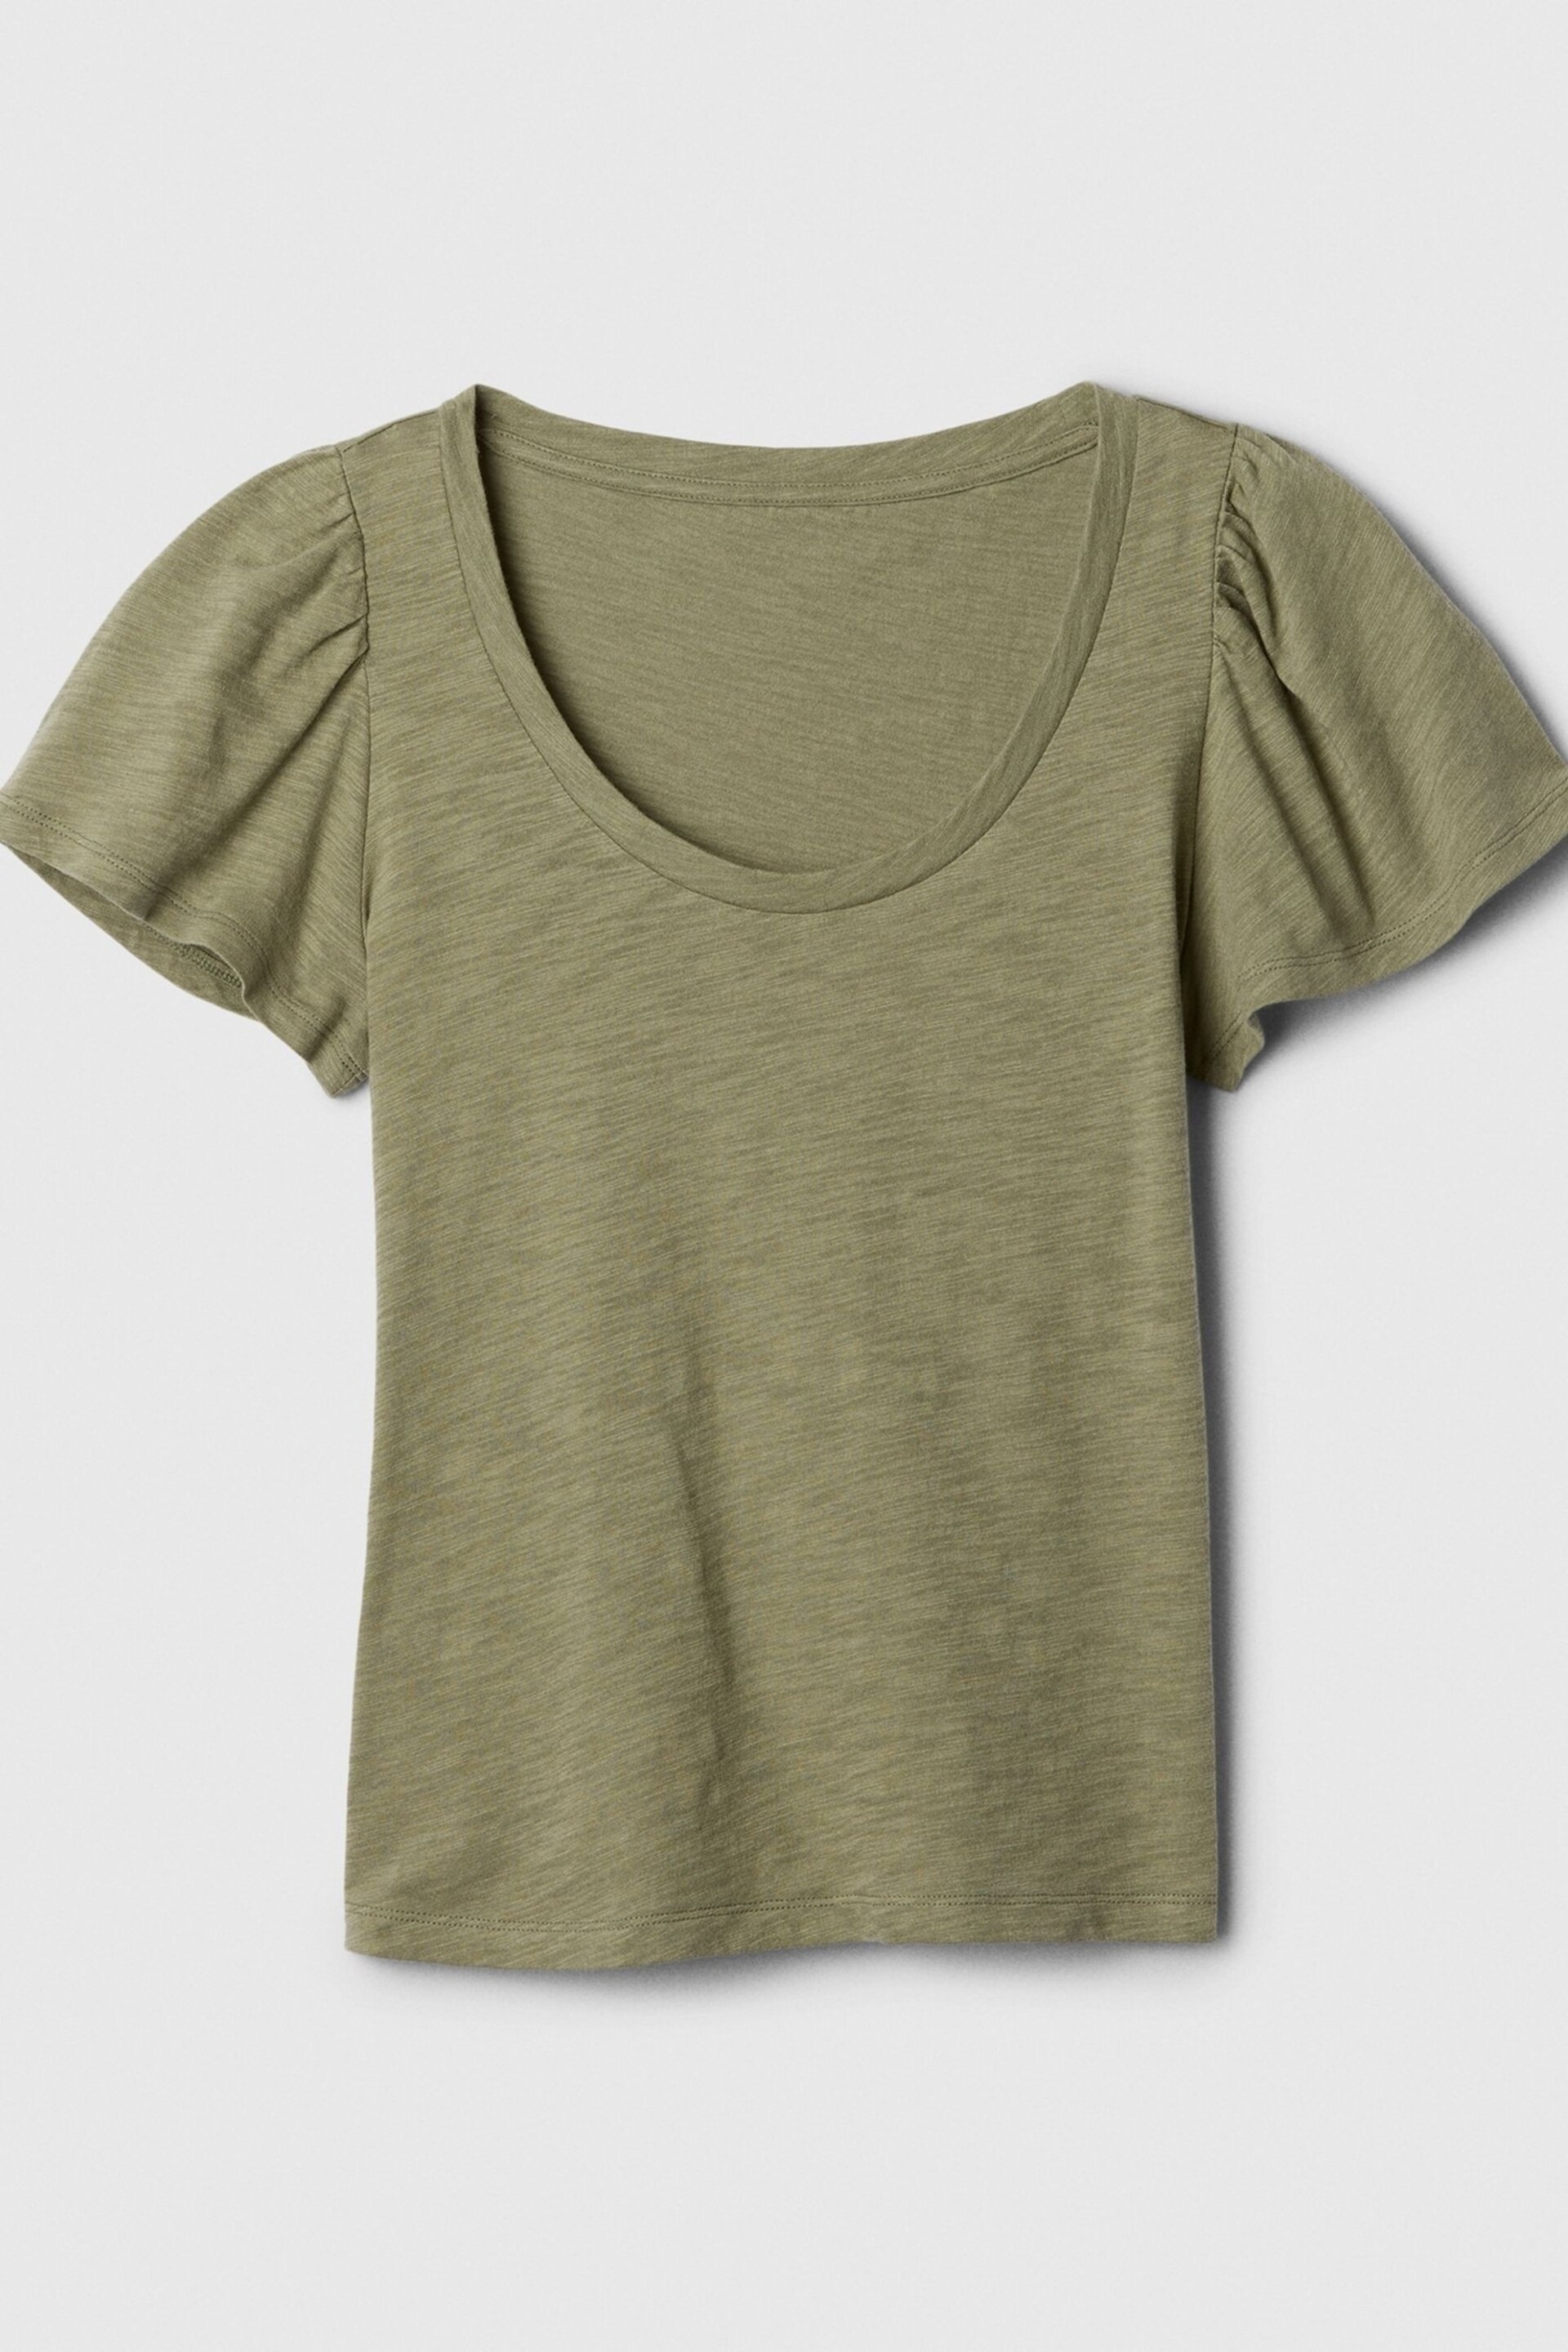 Gap Green ForeverSoft Slub Short Sleeve T-Shirt - Image 5 of 5